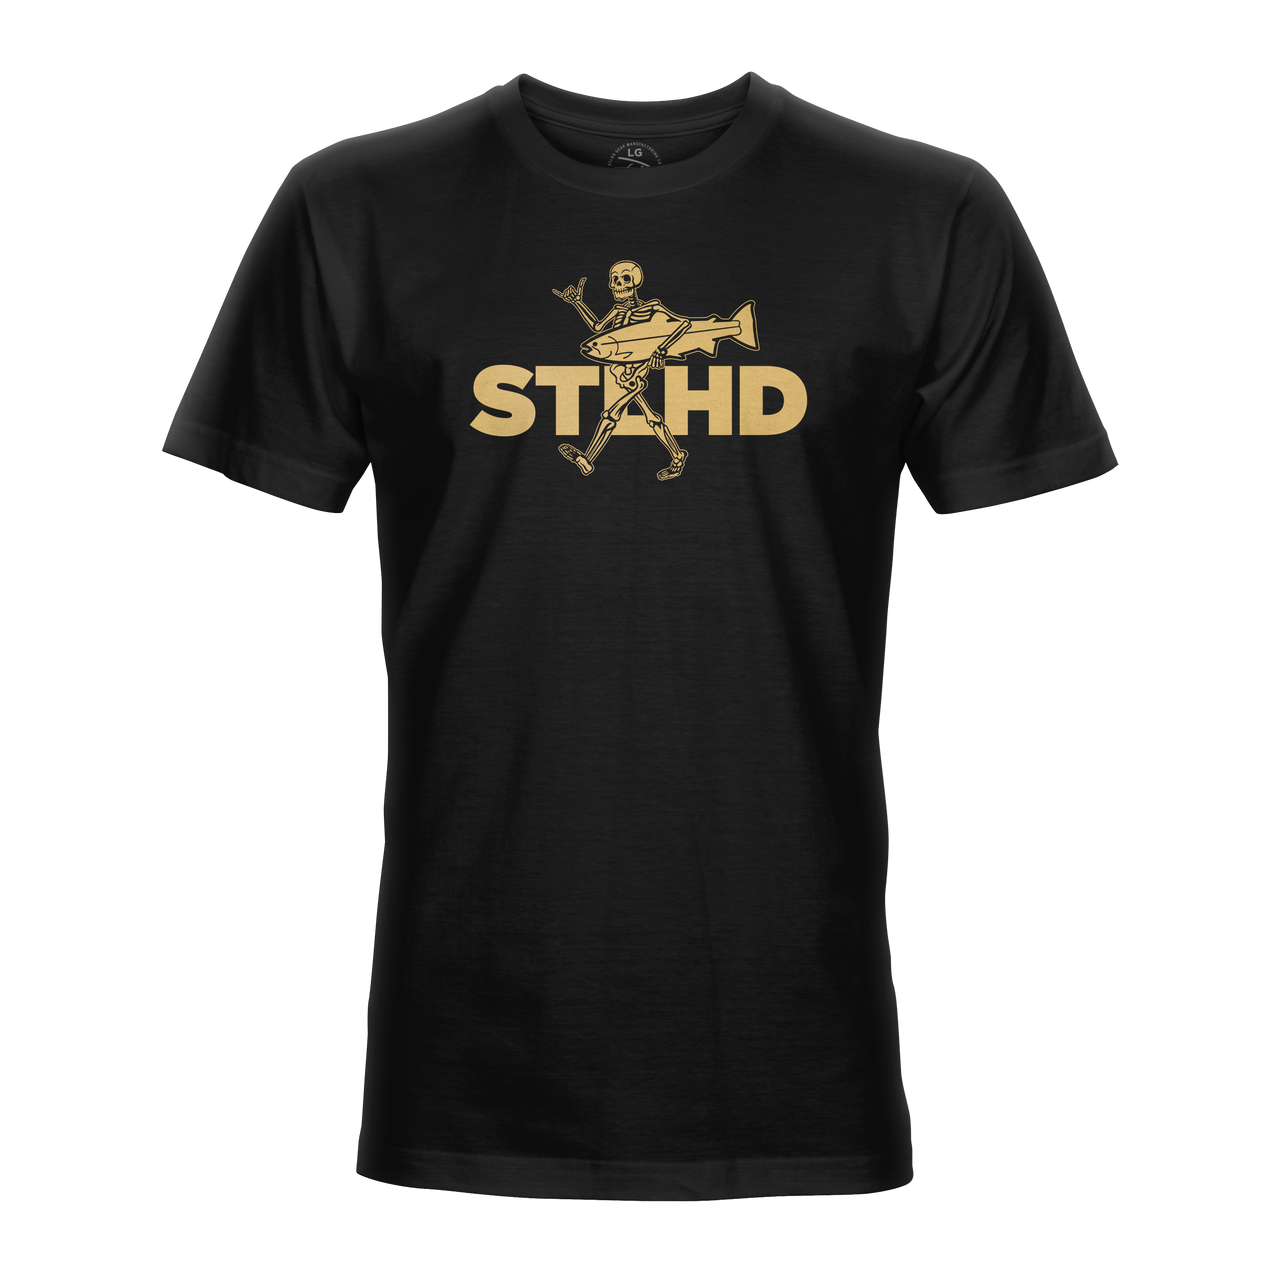 STLHD Men’s Loosey Goosey T-Shirt